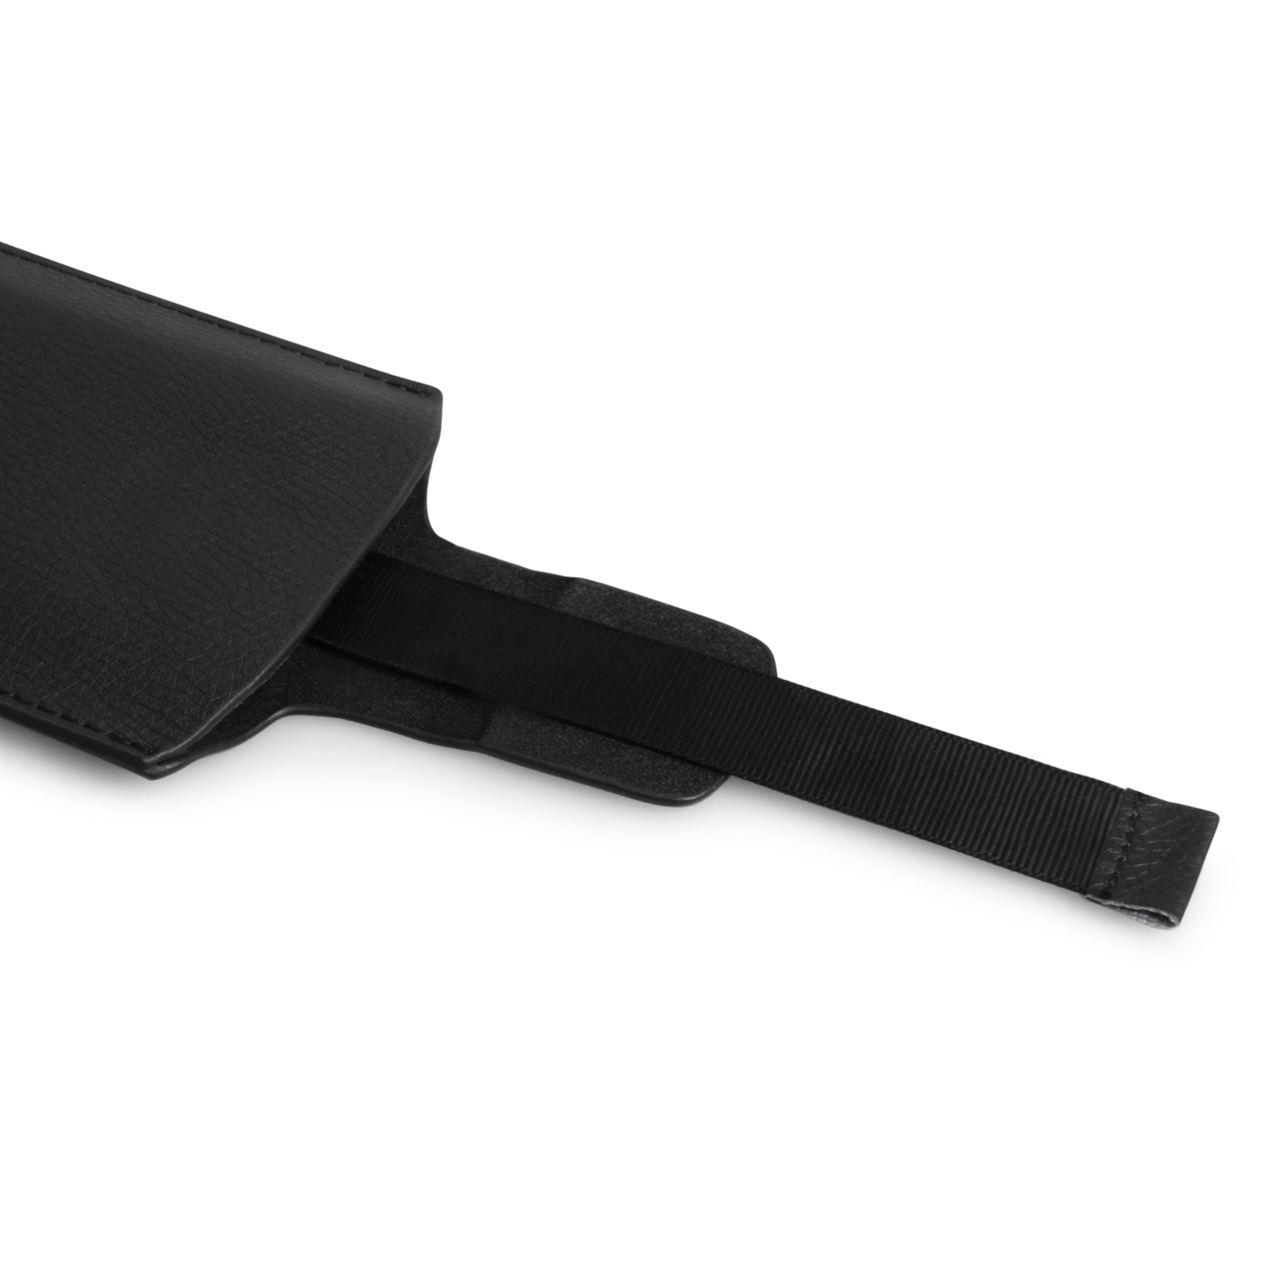 Caseflex Medium Textured Faux Leather Phone Pouch - Black